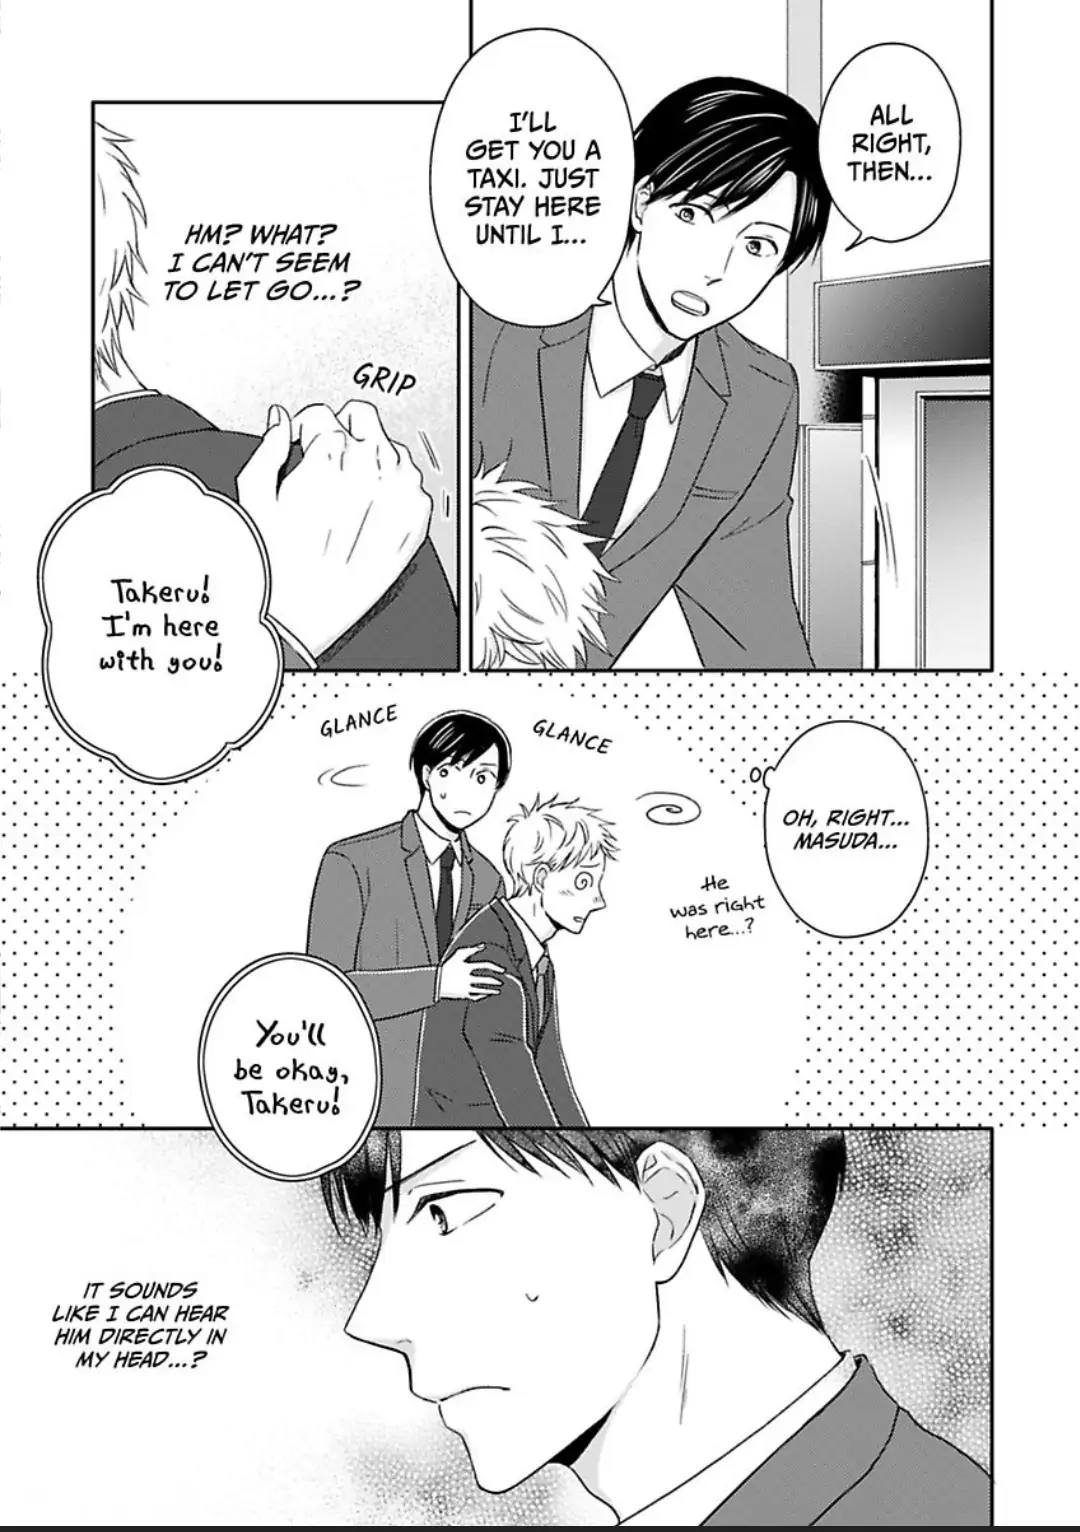 Masuda's Got A Hold On Shibata - Page 3